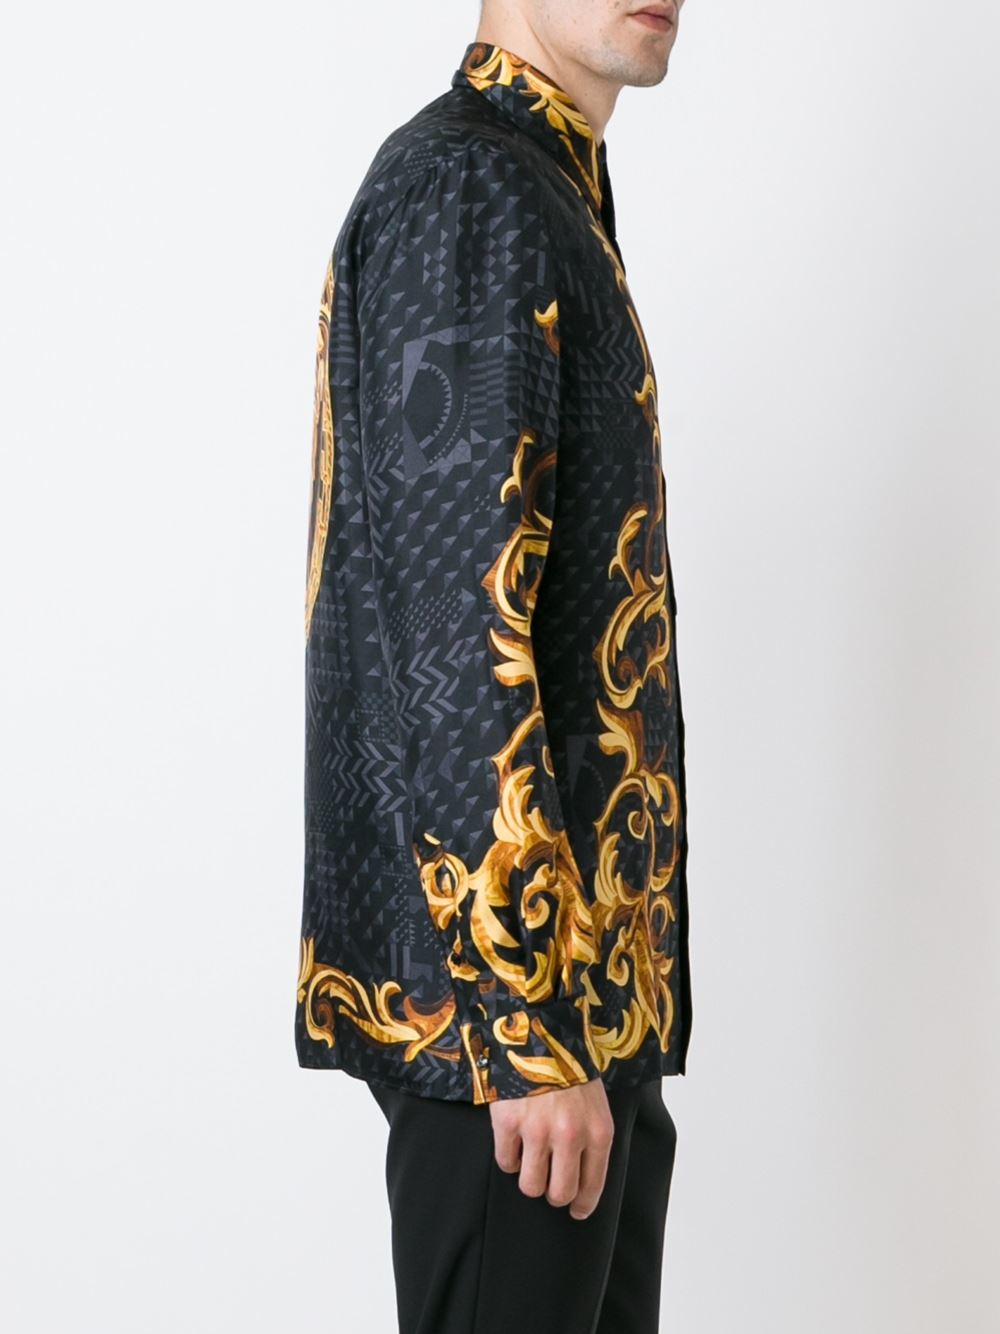 Versace Baroque Print Shirt in Black for Men - Lyst